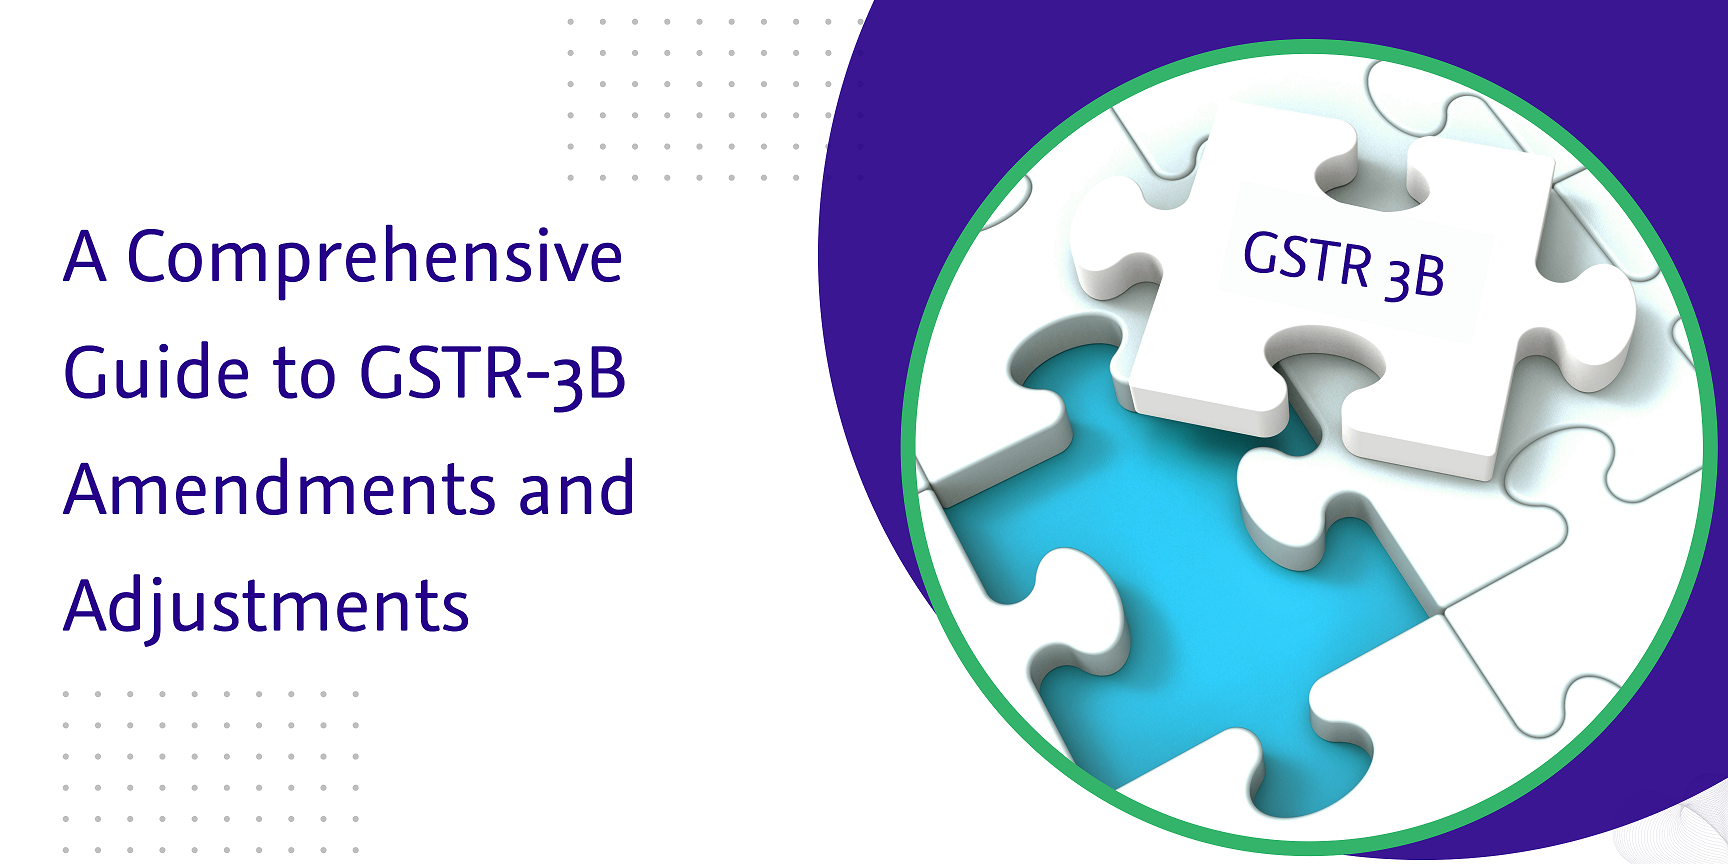 a comprehensive guide to gstr-3b amendments and adjustments